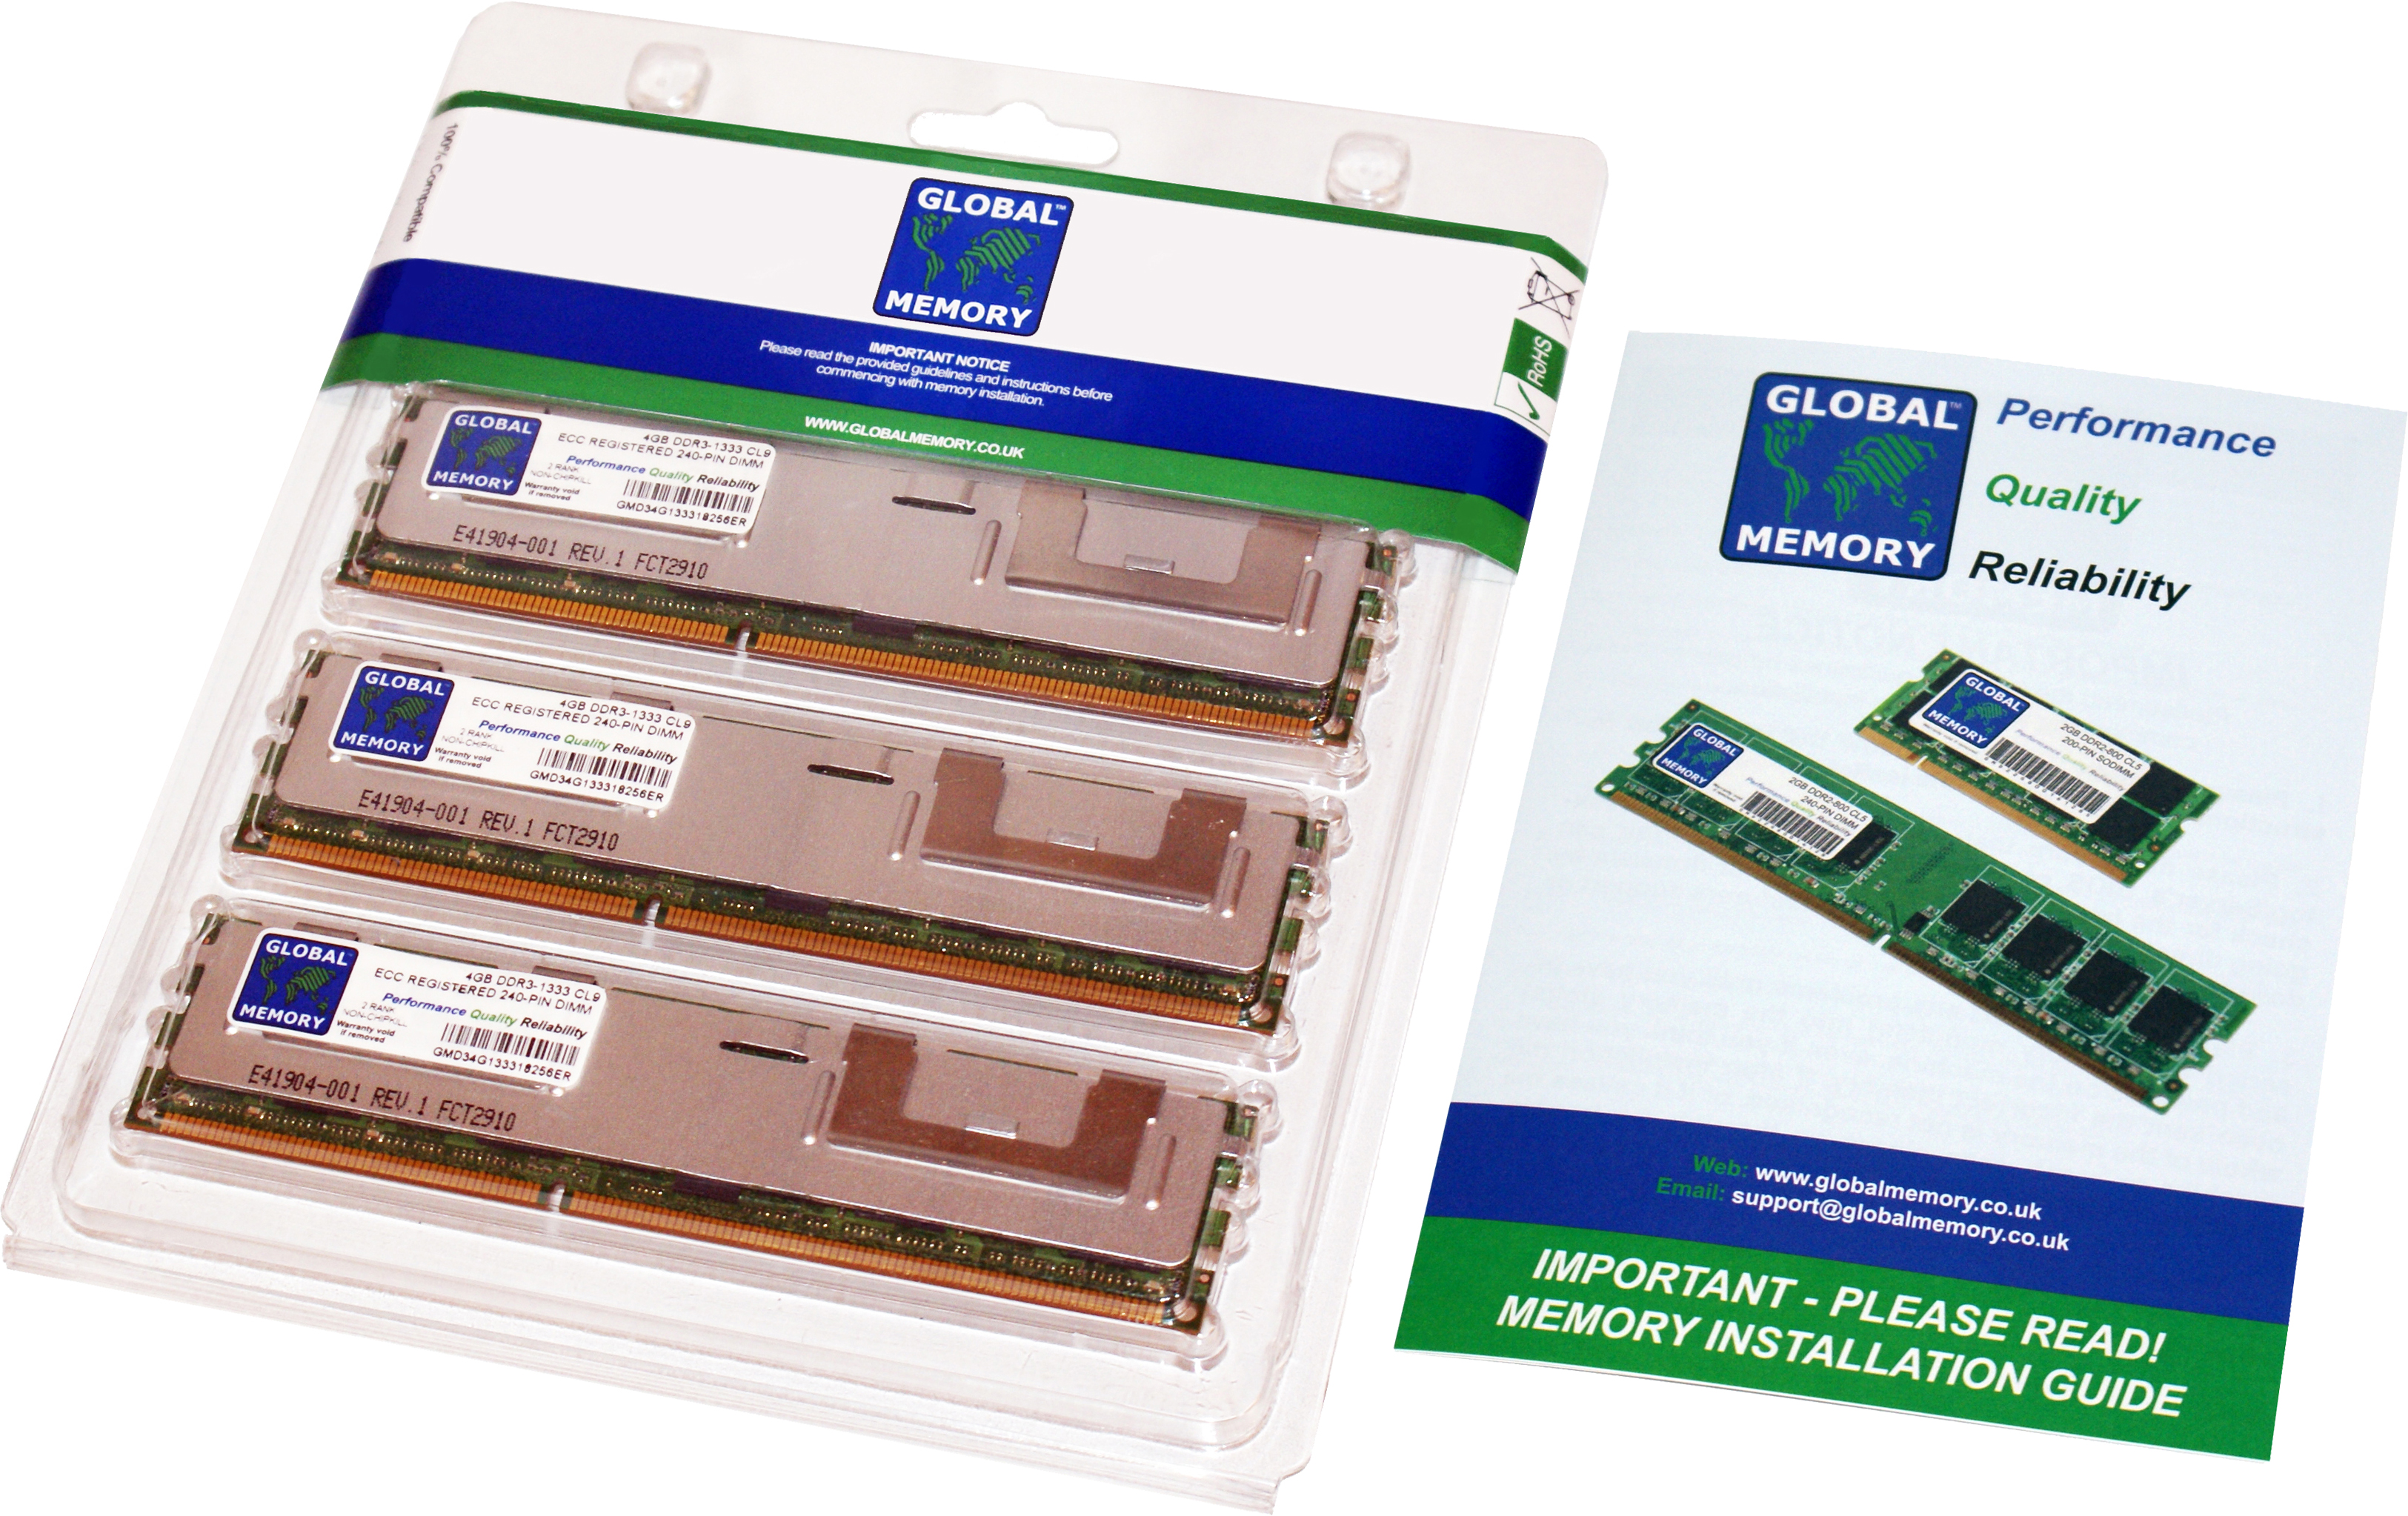 48GB (3 x 16GB) DDR3 1333MHz PC3-10600 240-PIN ECC REGISTERED DIMM (RDIMM) MEMORY RAM KIT FOR ACER SERVERS/WORKSTATIONS (12 RANK KIT NON-CHIPKILL)